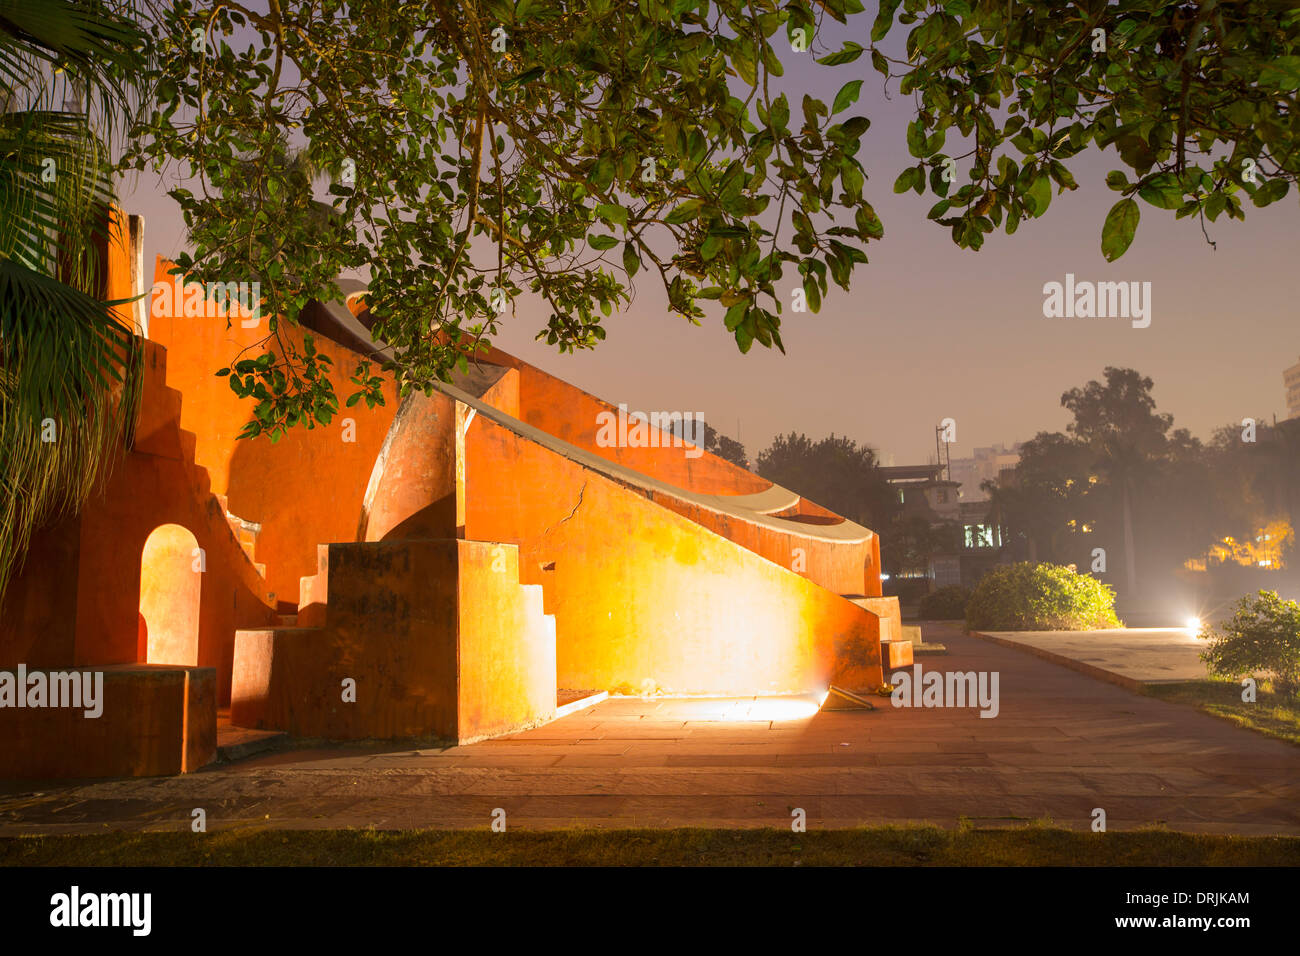 A monument in Delhi illuminated by solar lighting, India. Stock Photo